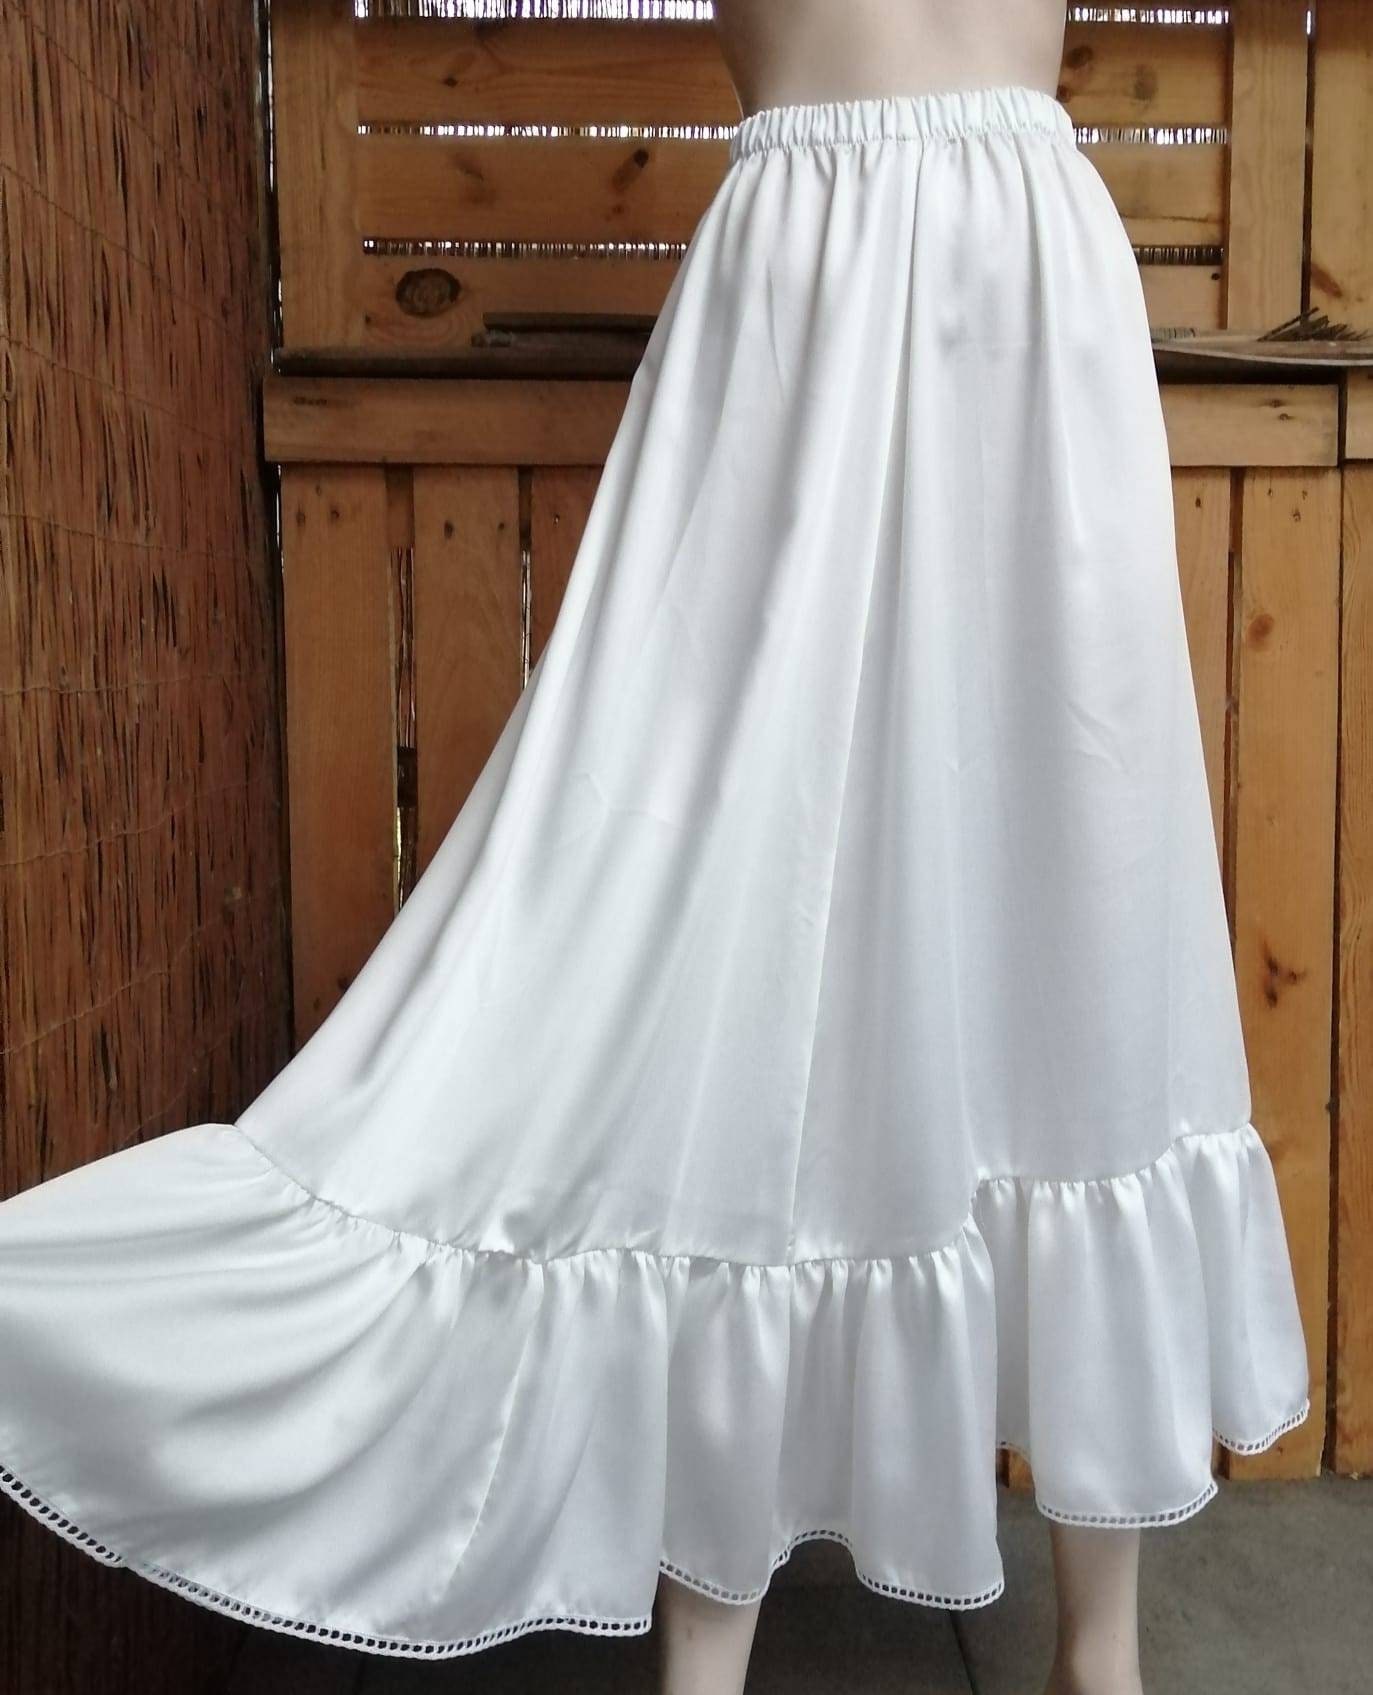 Womens Under Dresses For Dress Underskirt Cotton Half Slip Lace #S-XXL Gift